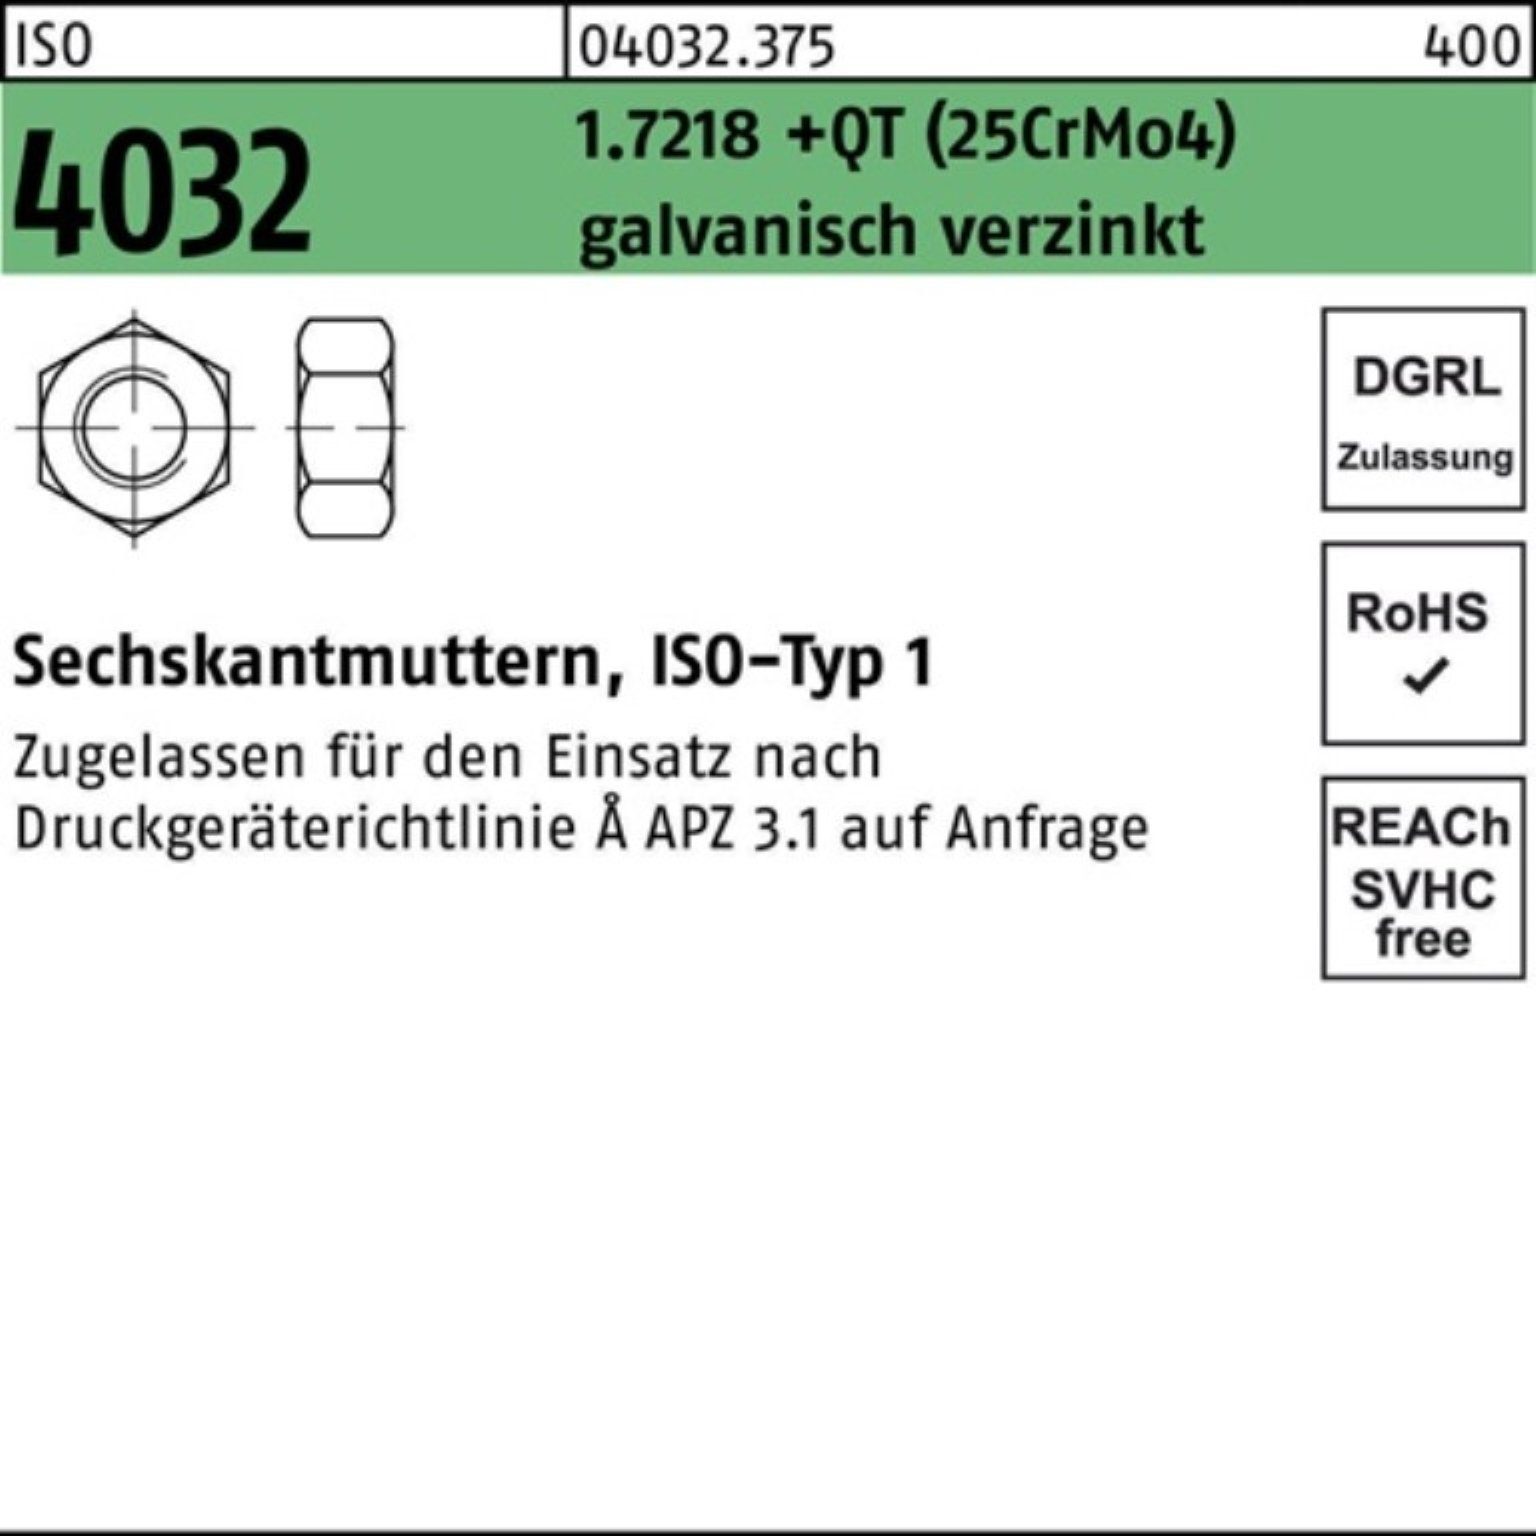 100er ISO 4032 galv.verz +QT 1.7218 M33 Sechskantmutter Muttern Bufab (25CrMo4) Pack